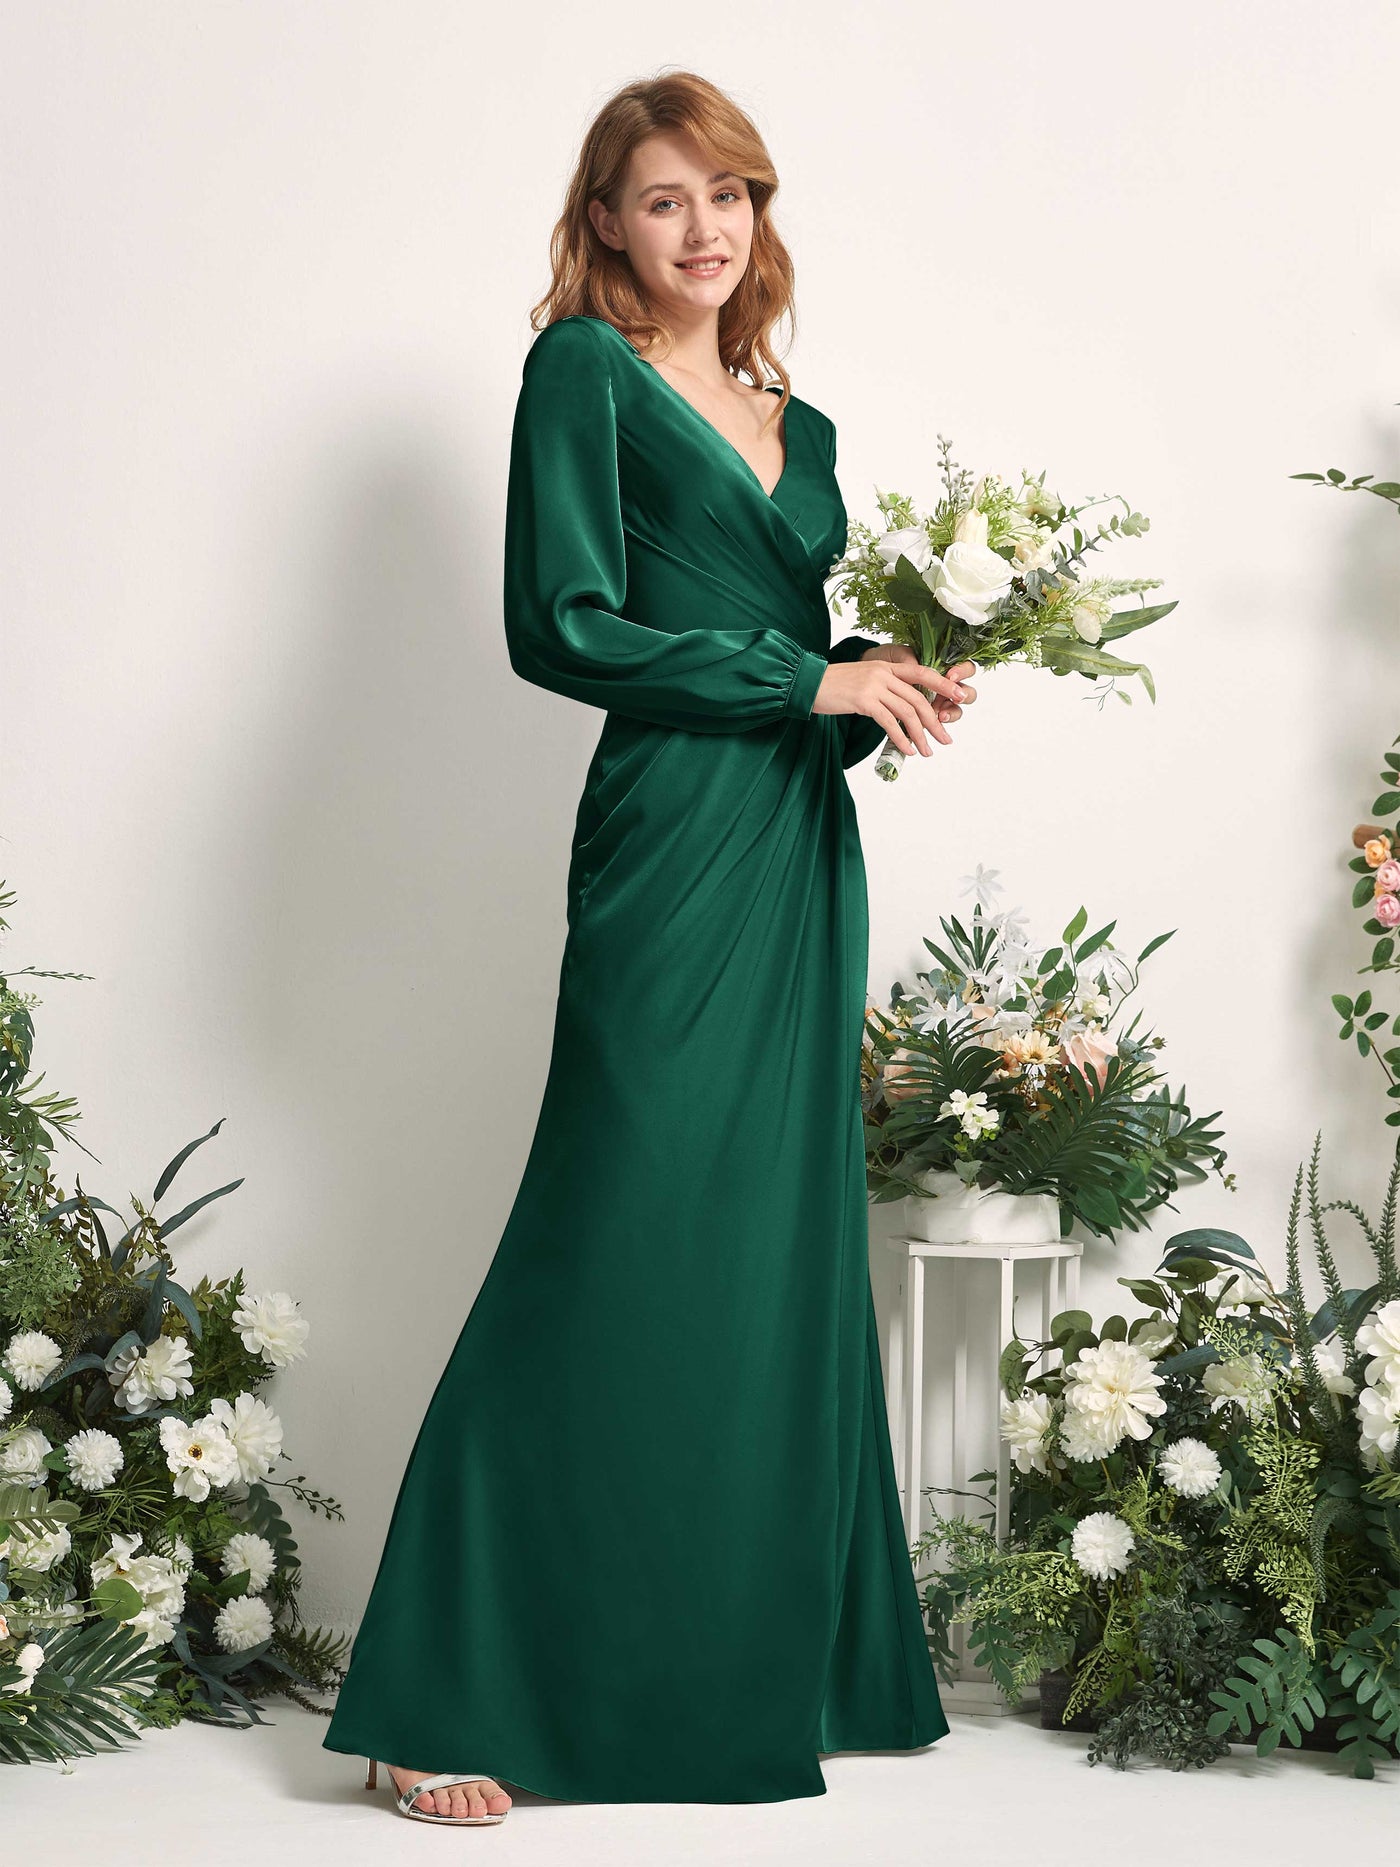 Hunter Green Bridesmaid Dresses Bridesmaid Dress Ball Gown Satin V-neck Full Length Long Sleeves Wedding Party Dress (80225129)#color_hunter-green